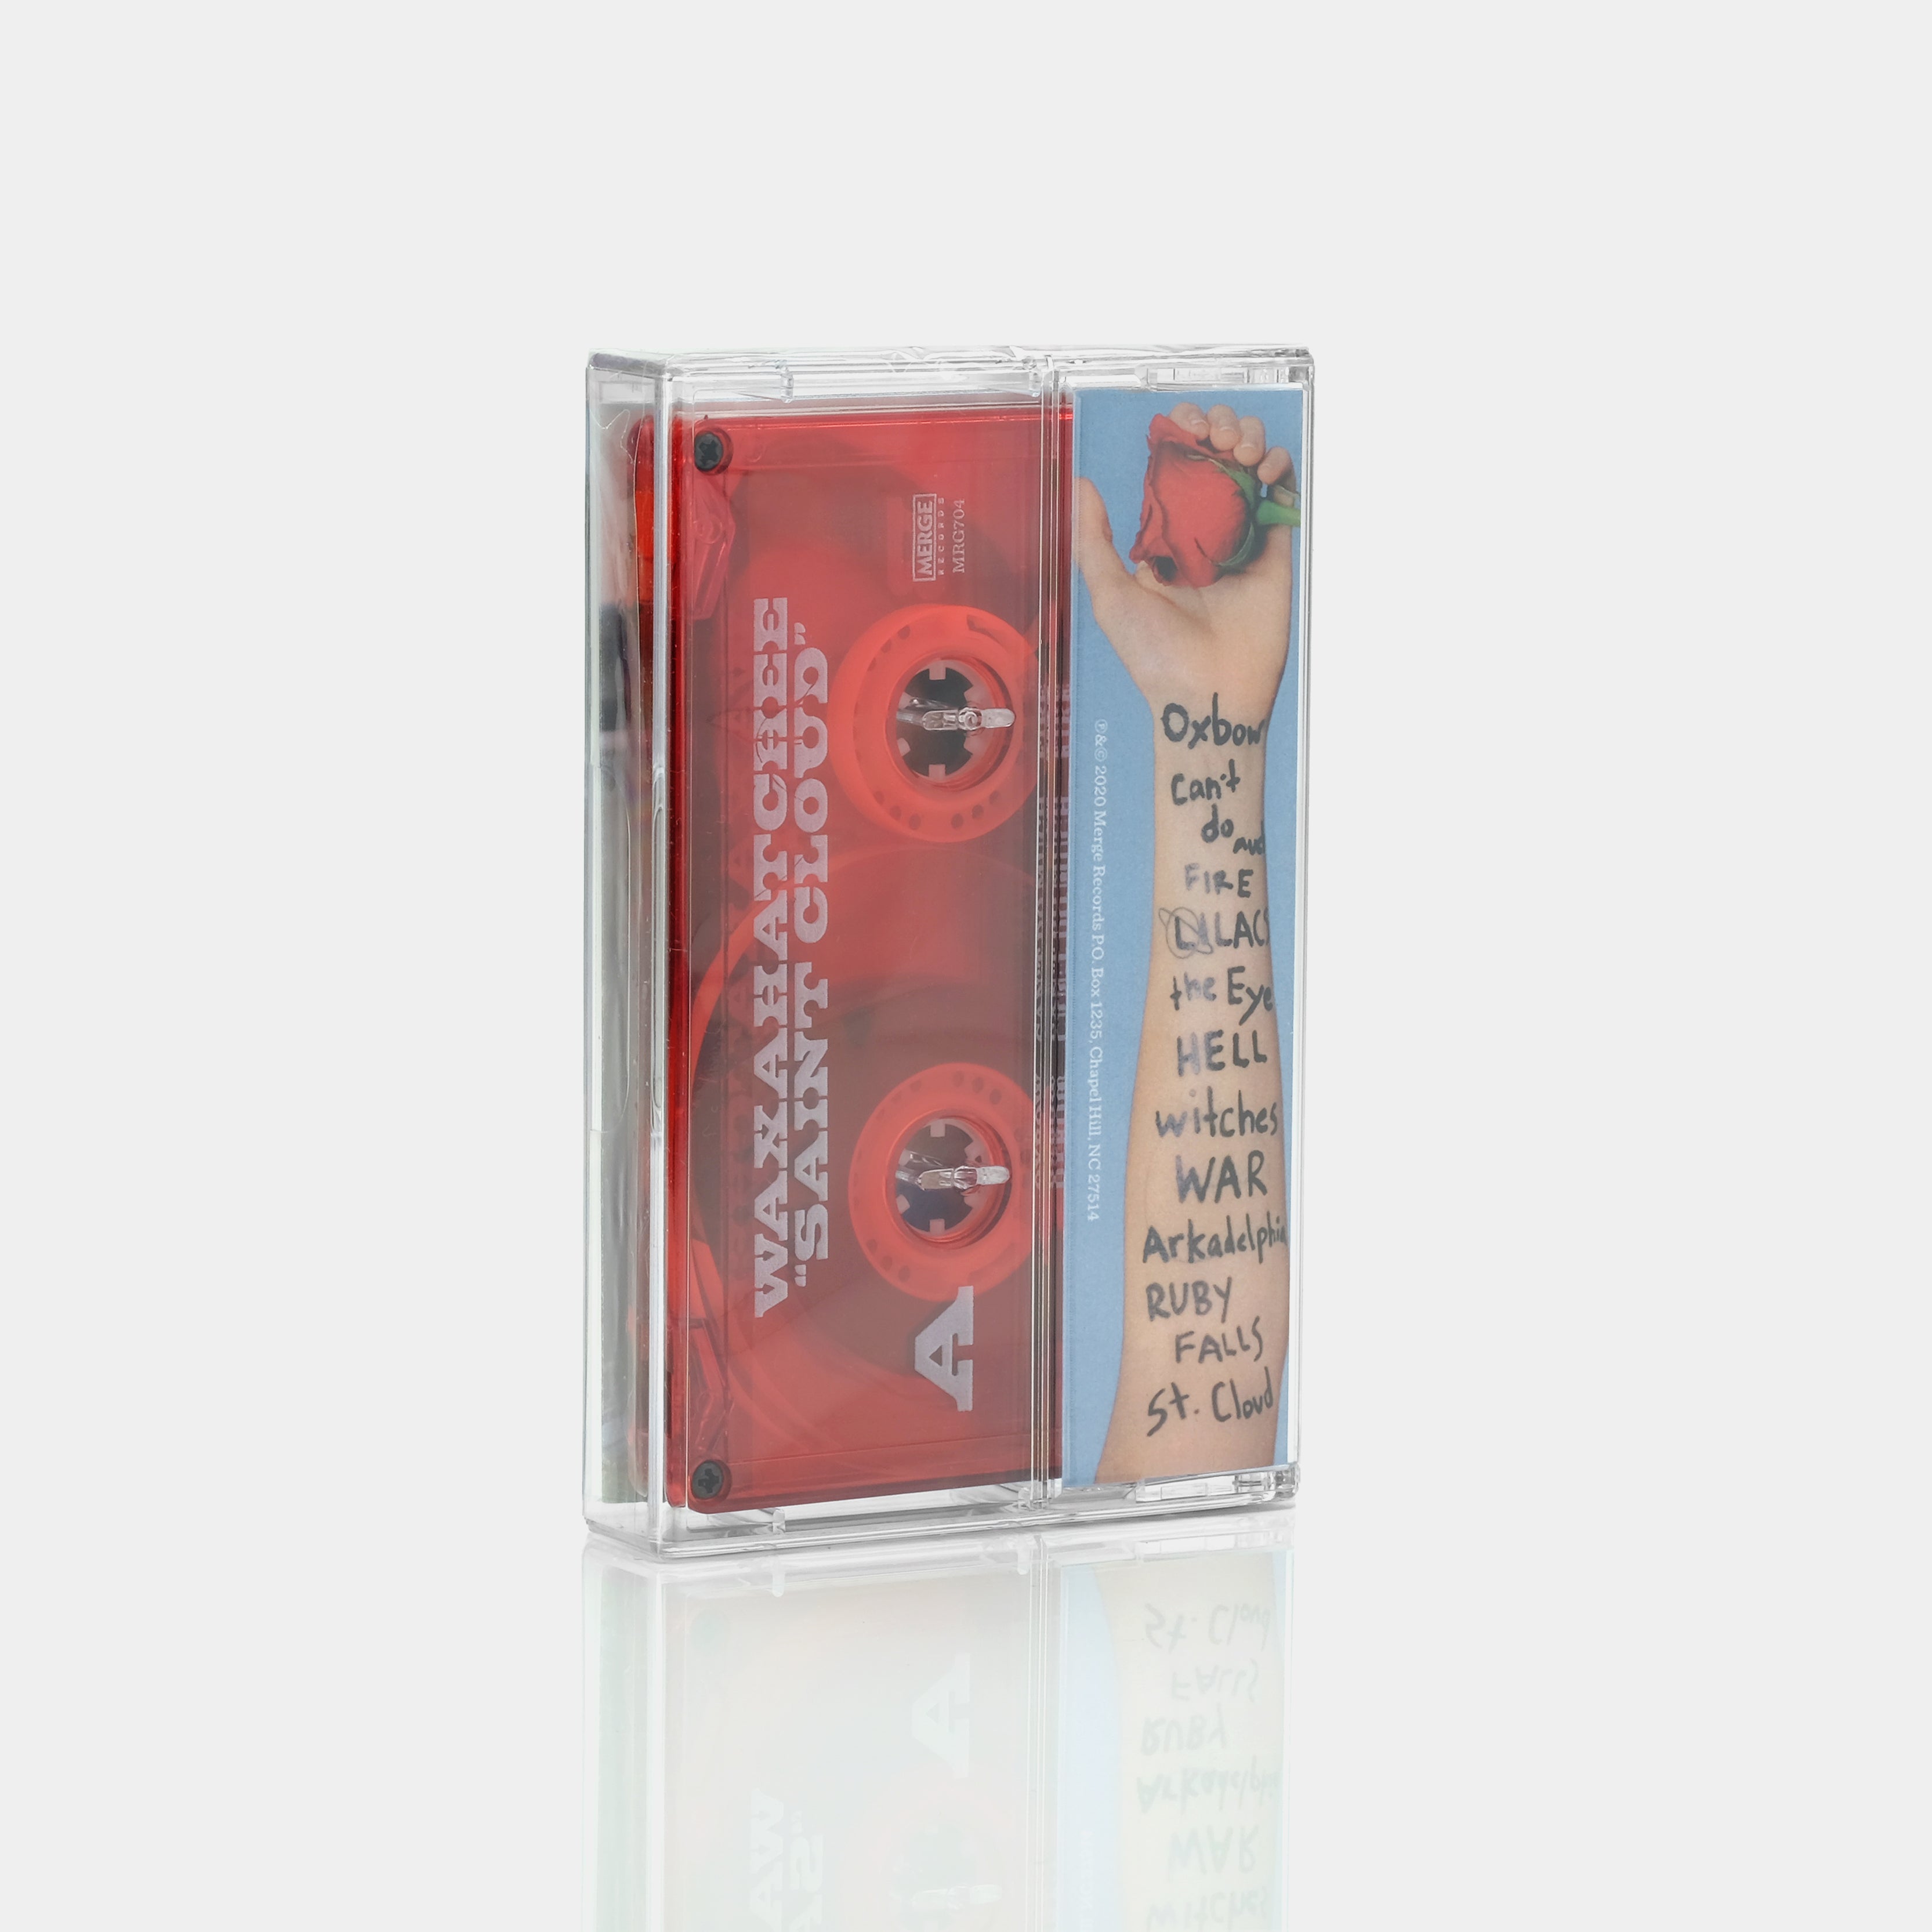 Waxahatchee - Saint Cloud (Retrospekt Exclusive) Cassette Tape